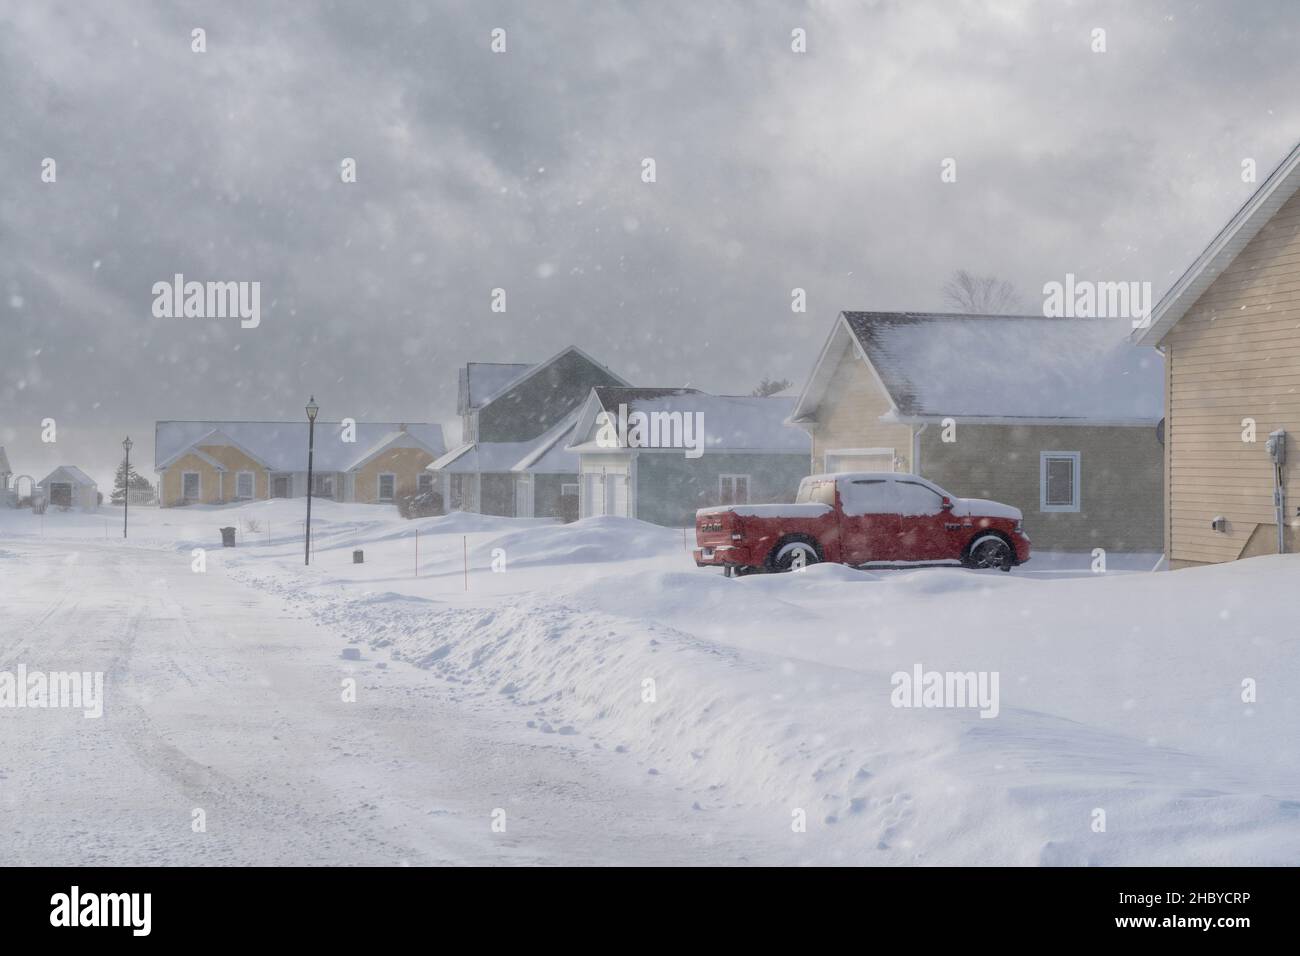 Snow falling over a suburban neighborhood. Stock Photo